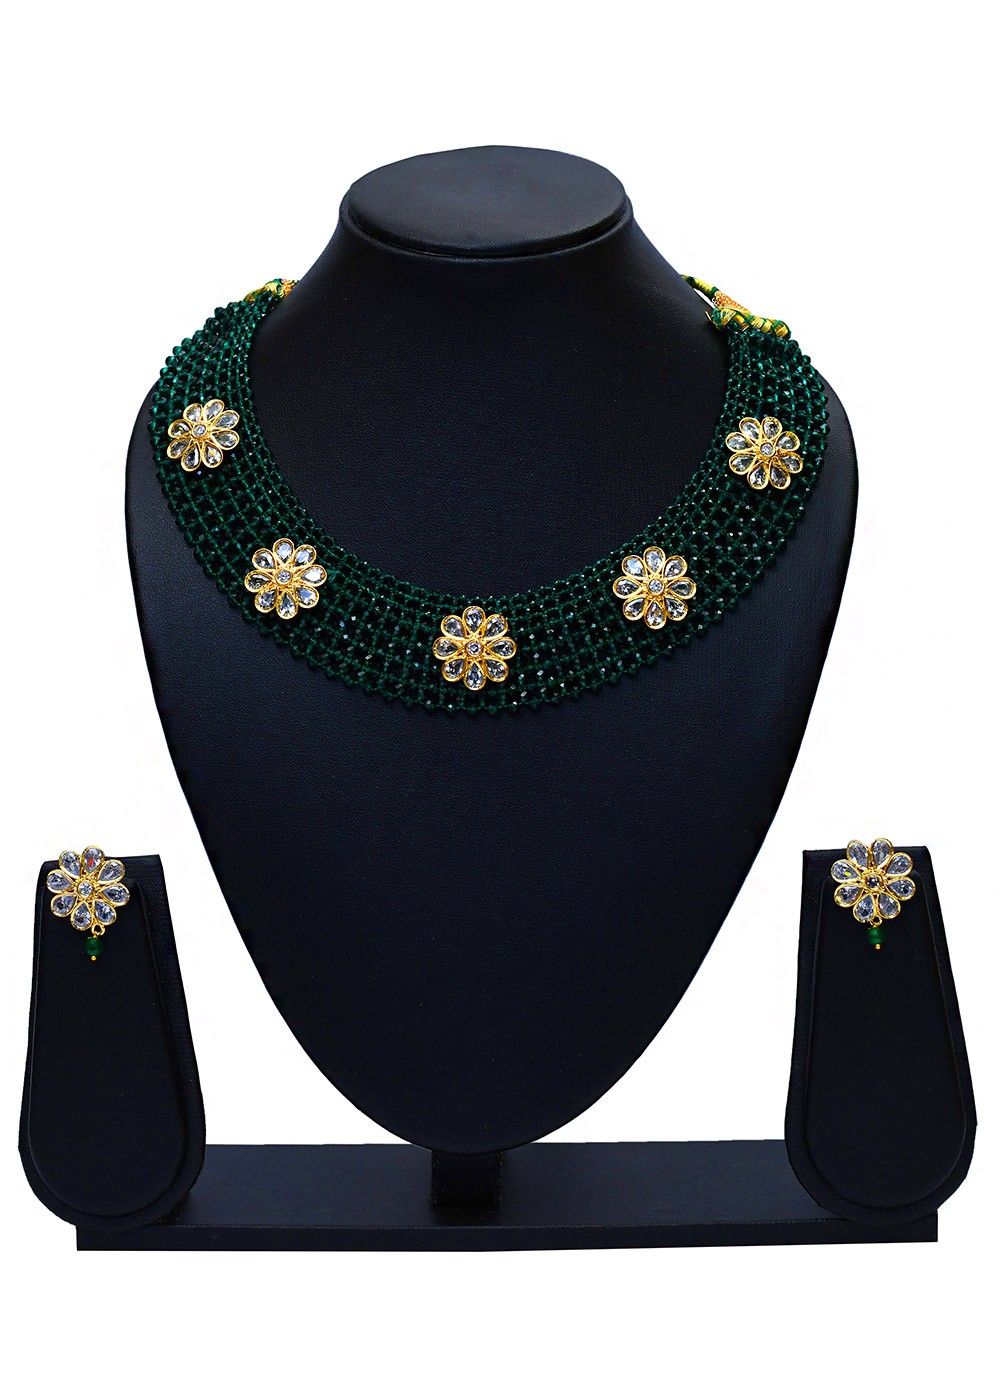 Necklace with deep green pendant | THOMAS SABO